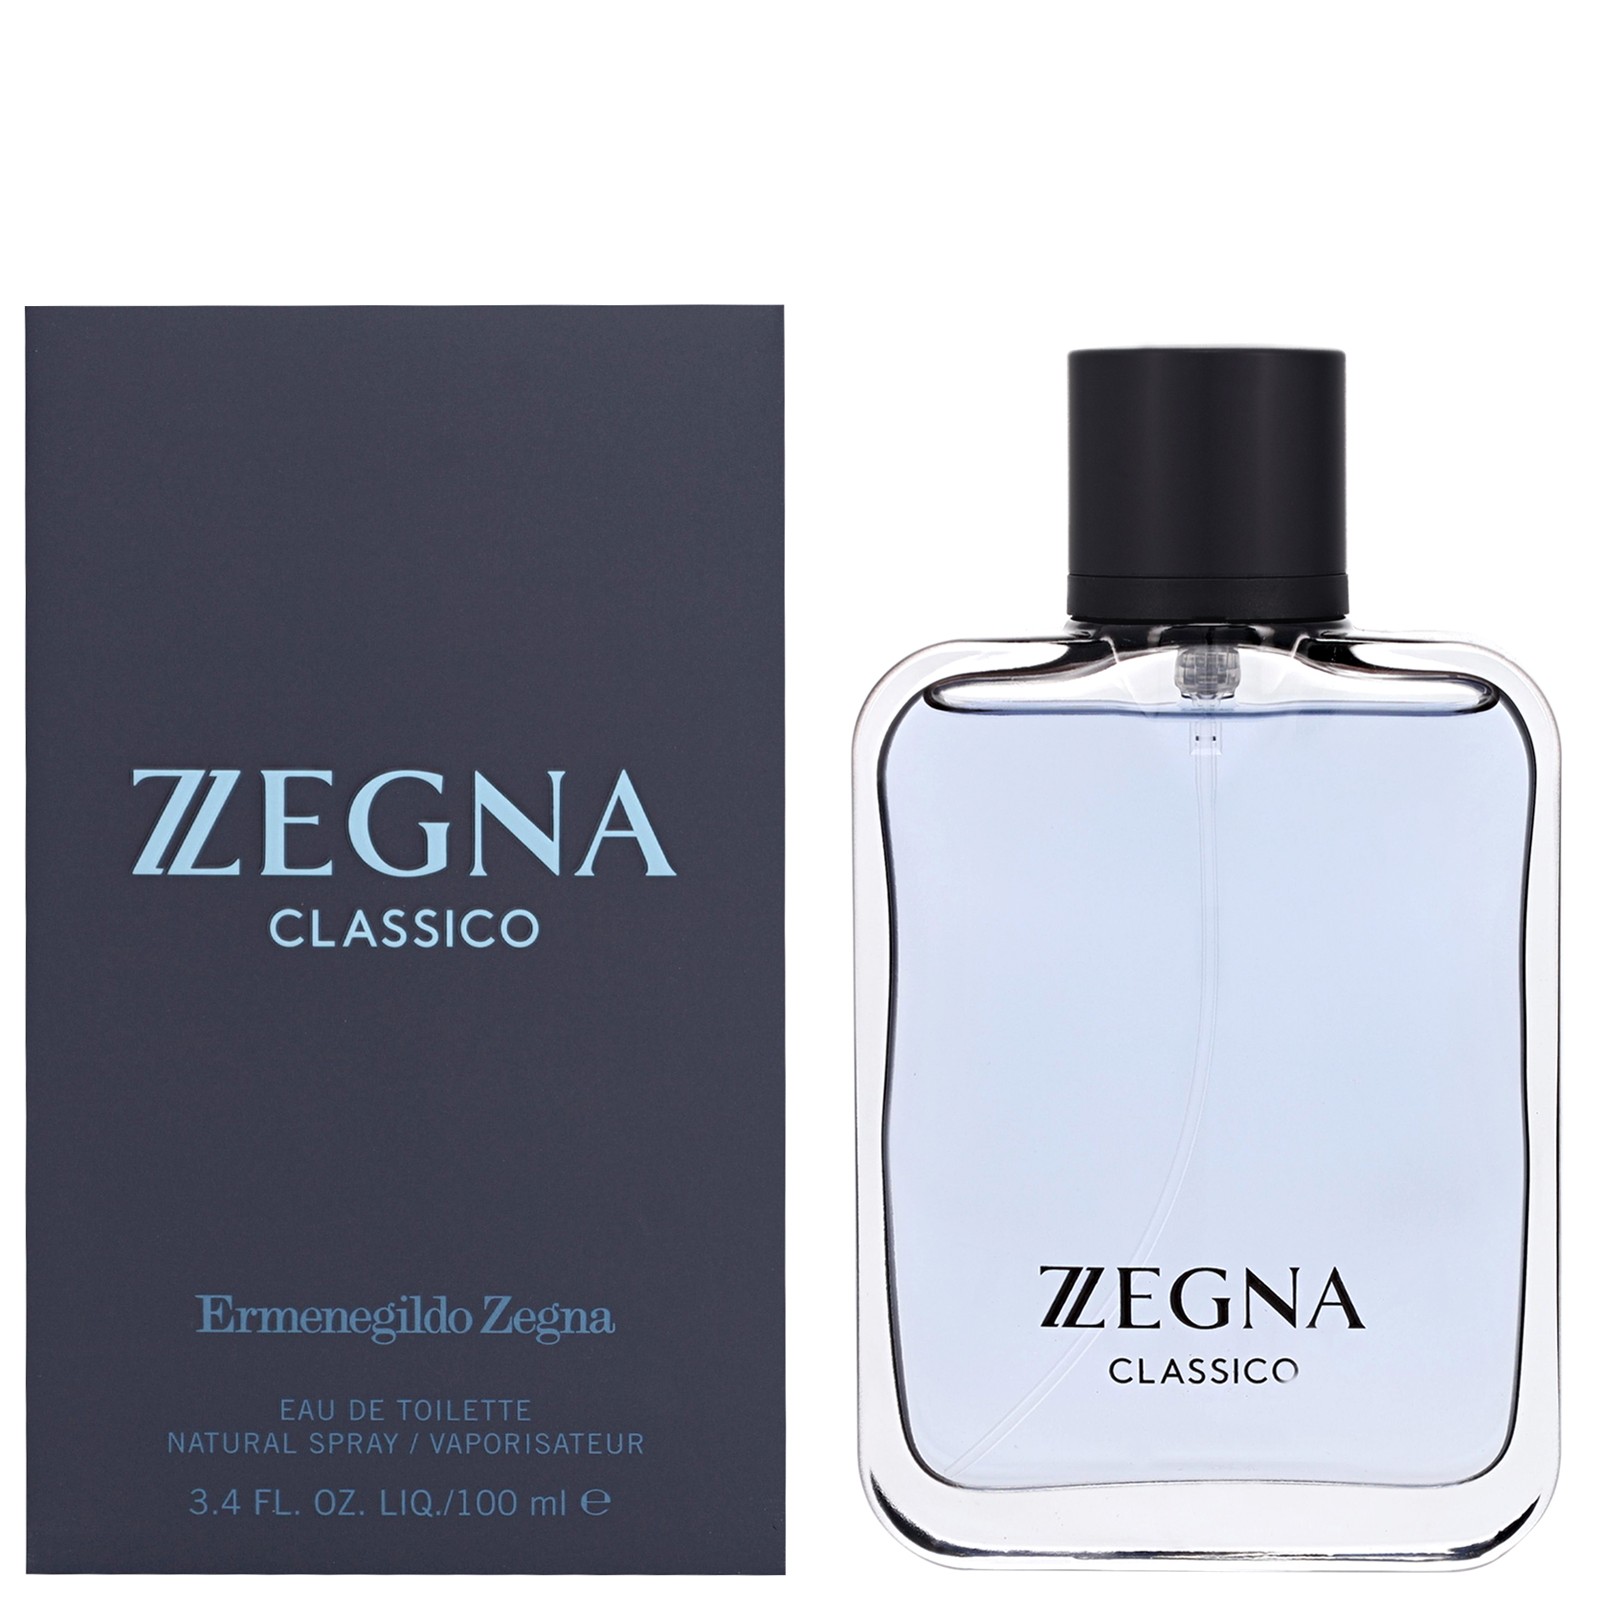 Z Zegna Classico By Ermenegildo Zegna